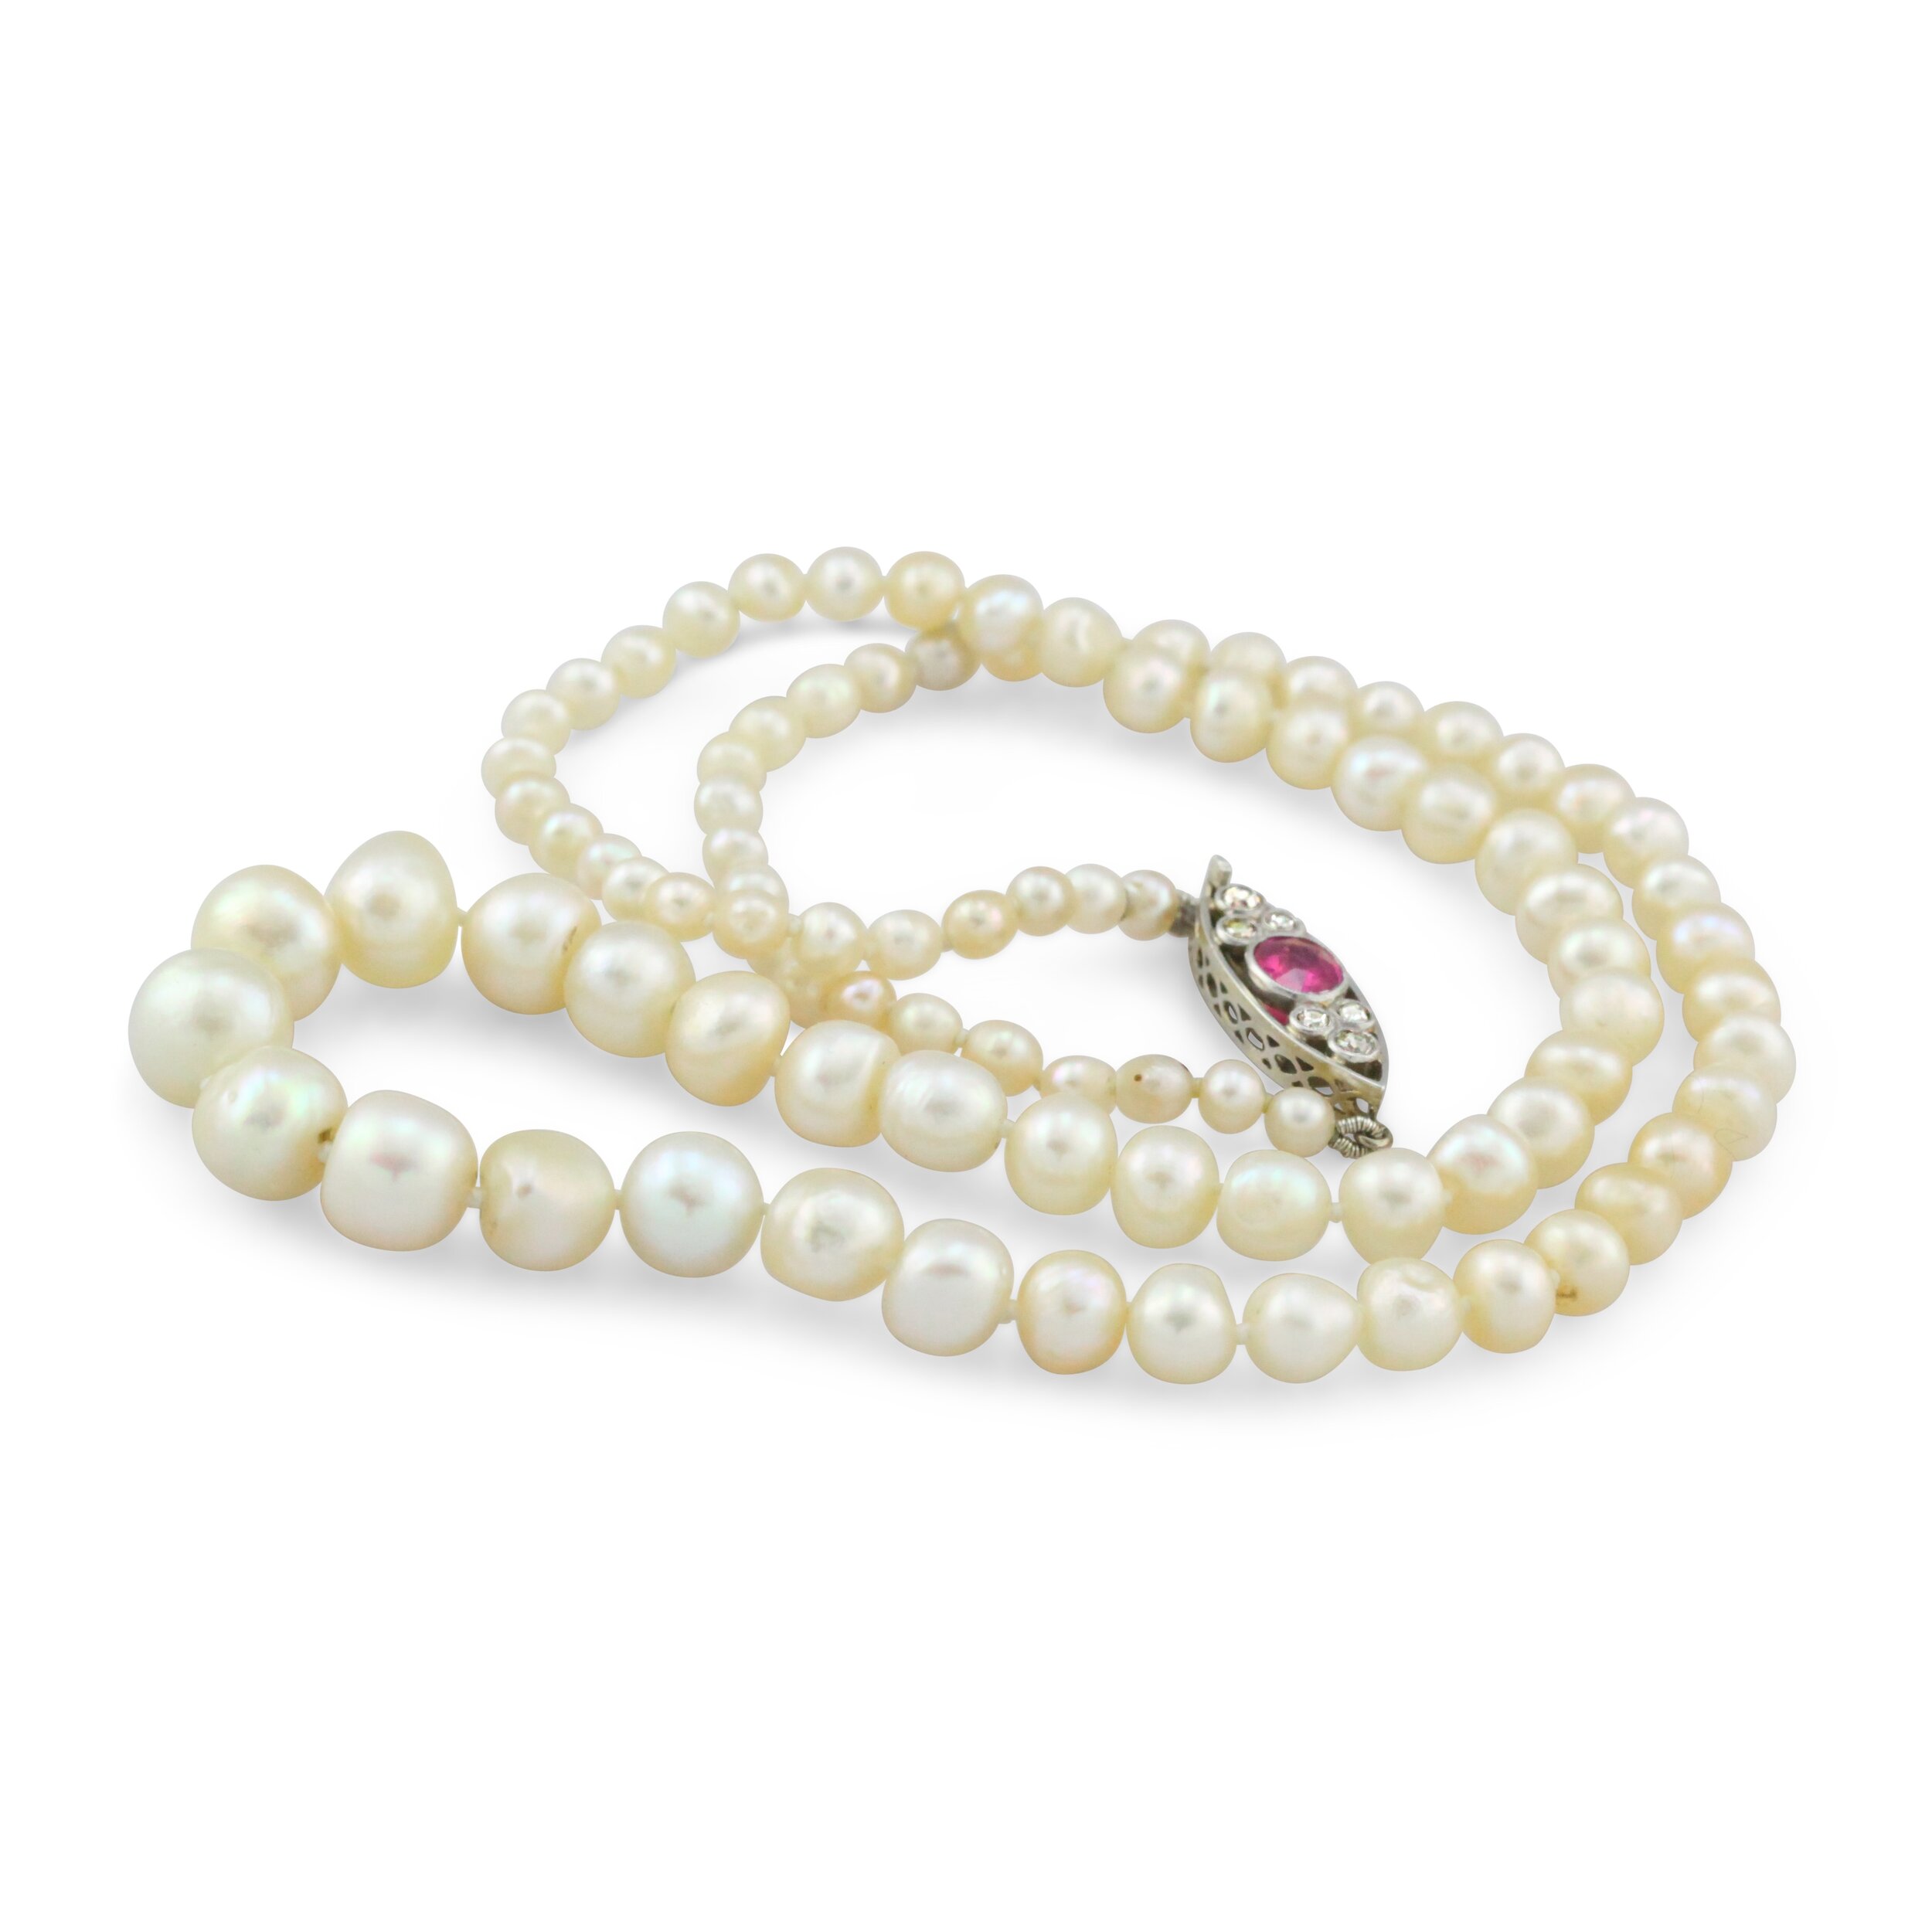 6 natural pearls.jpg